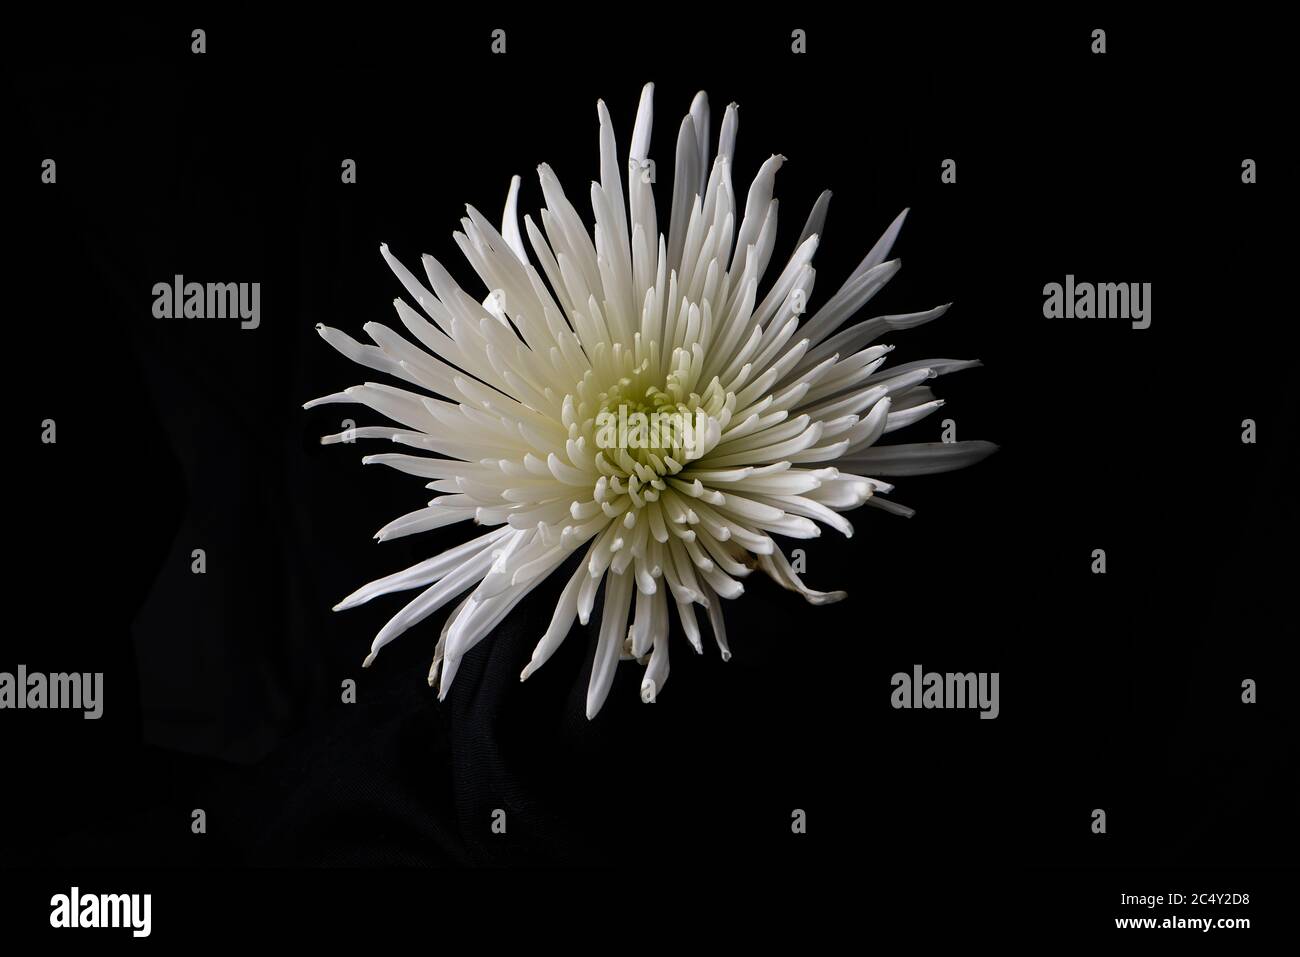 White spider bloom chrysanthemum flower on a black background Stock Photo